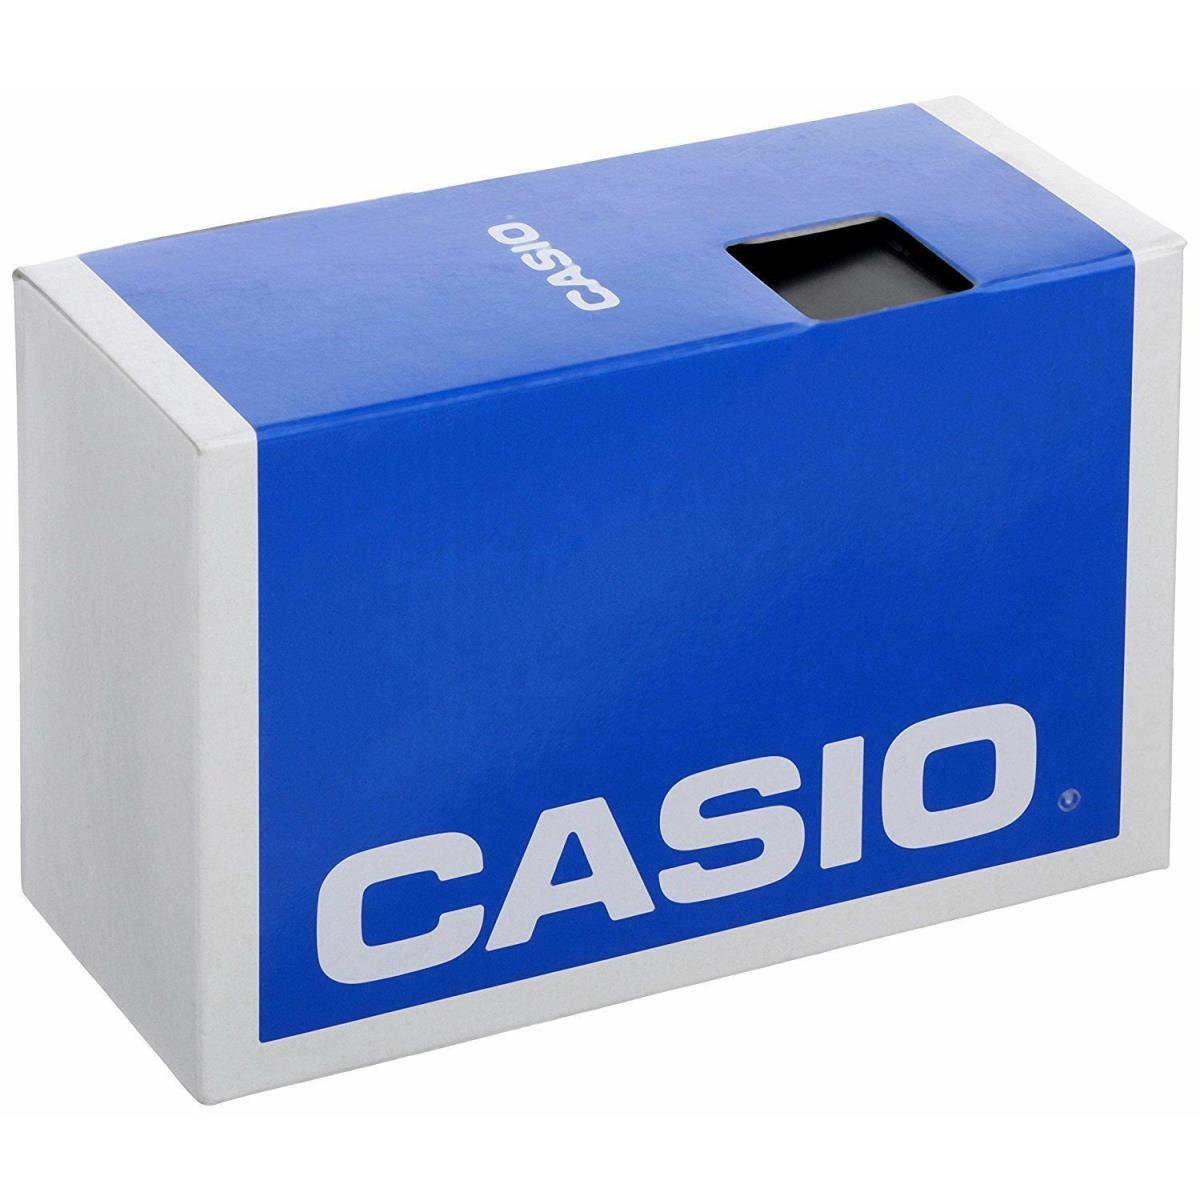 Casio Wave Ceptor Illuminator Men`s Atomic Timekeeping 47mm Watch WV200A-2AV